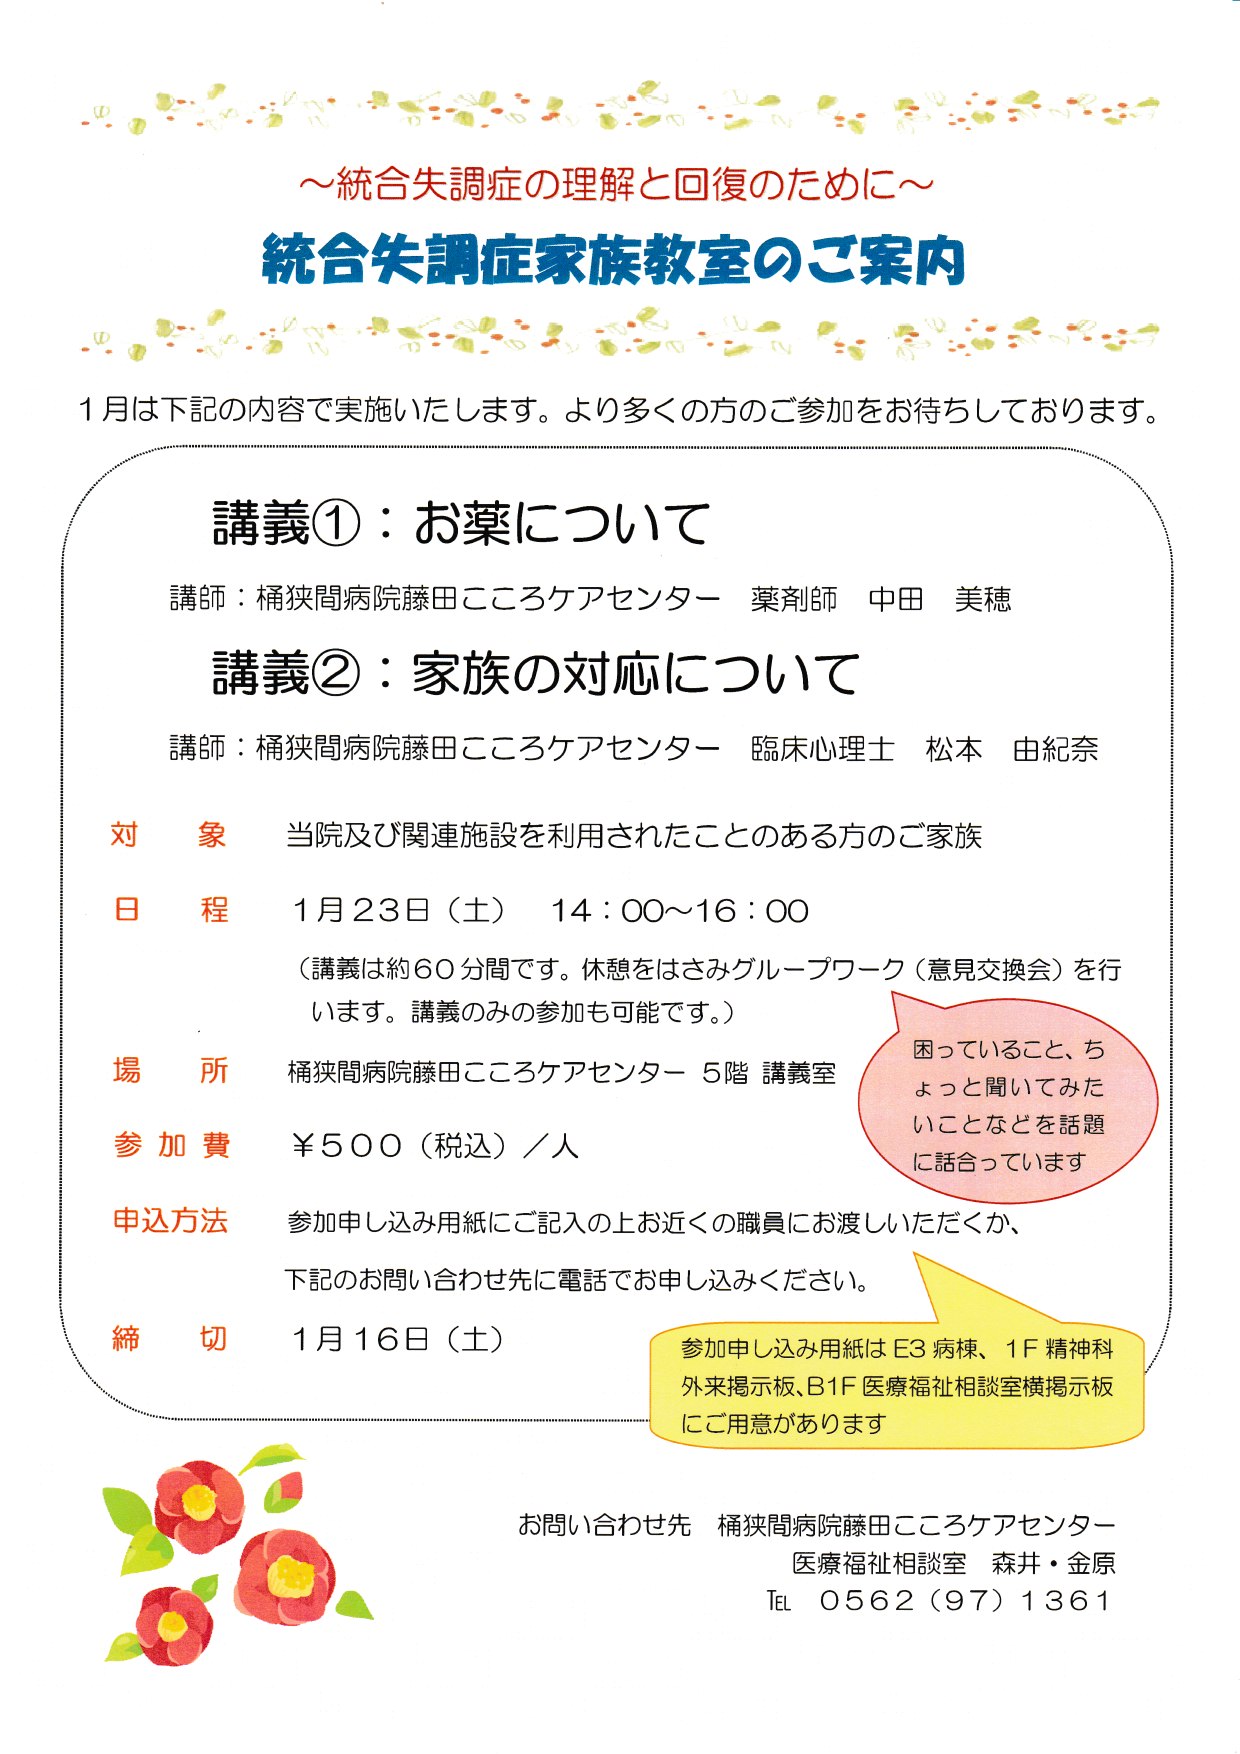 http://www.seishinkai-kokoro.jp/news/1%E6%9C%88%E5%AE%B6%E6%97%8F%E6%95%99%E5%AE%A4.jpg